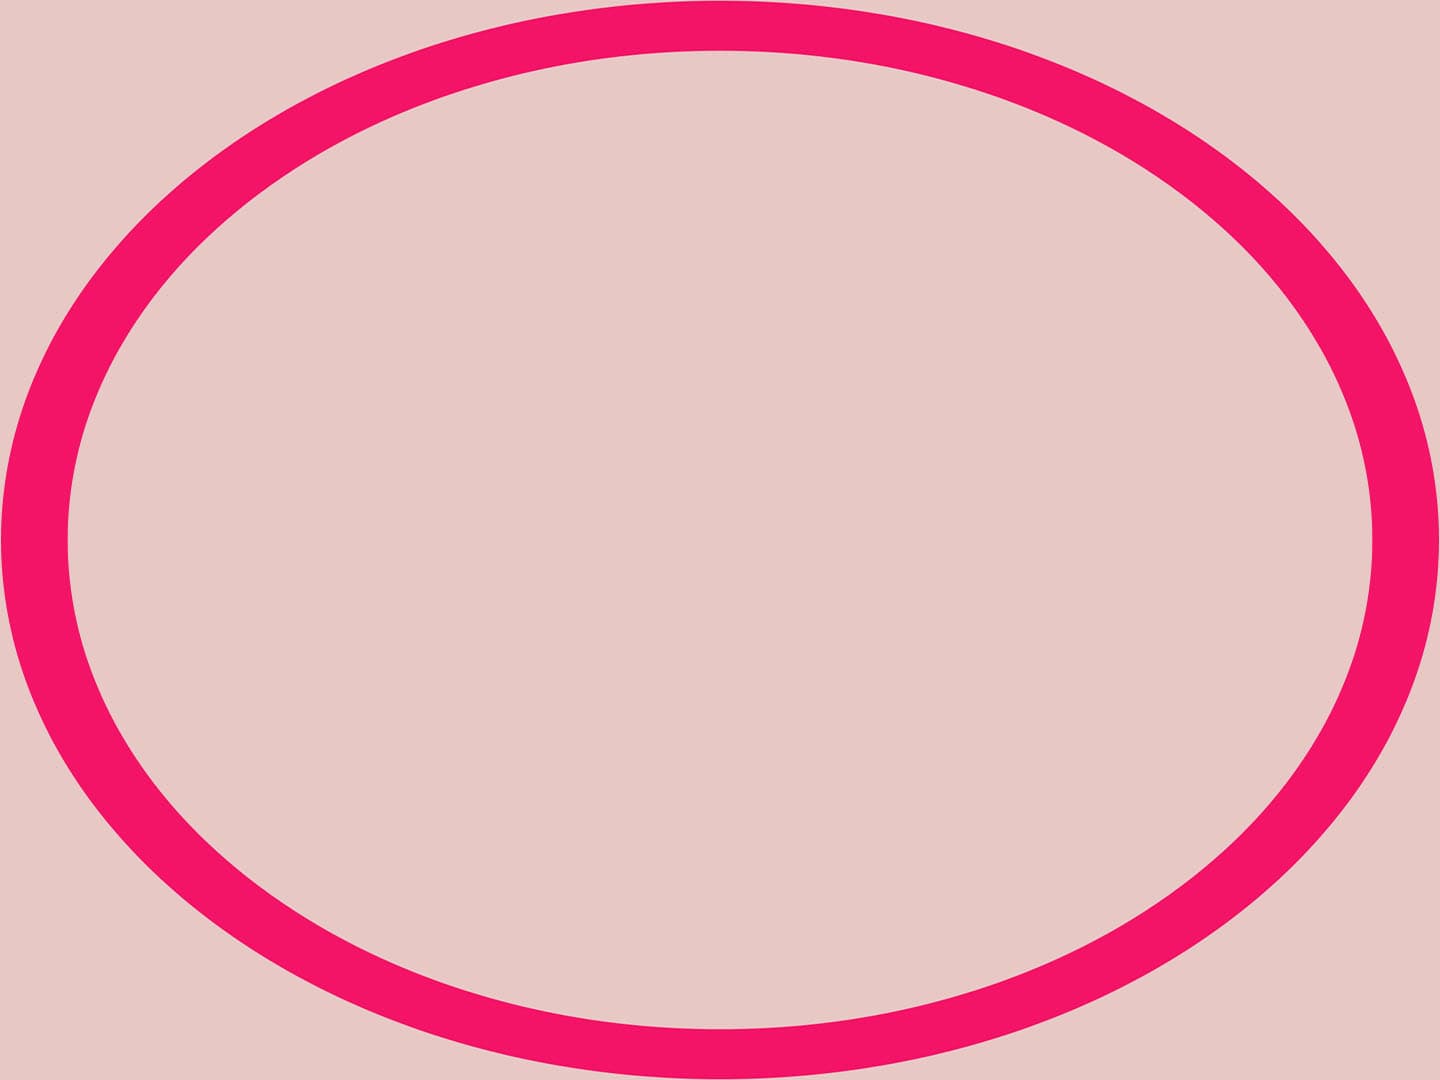 Duvet Cover Strimma - Cherry Blossom Pink